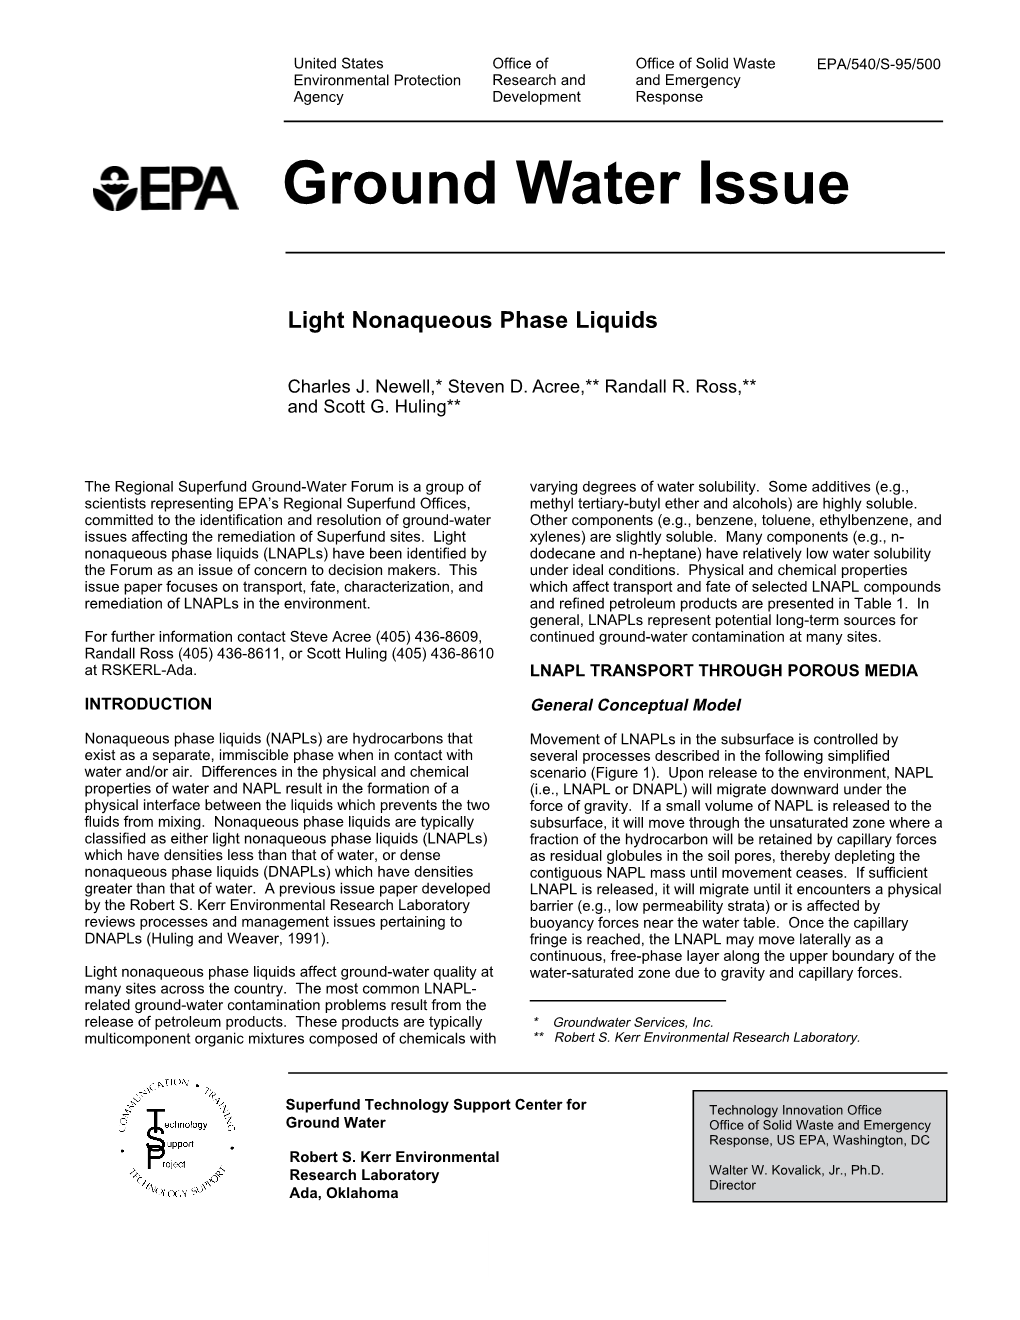 Ground Water Issue: Light Nonaqueous Phase Liquids